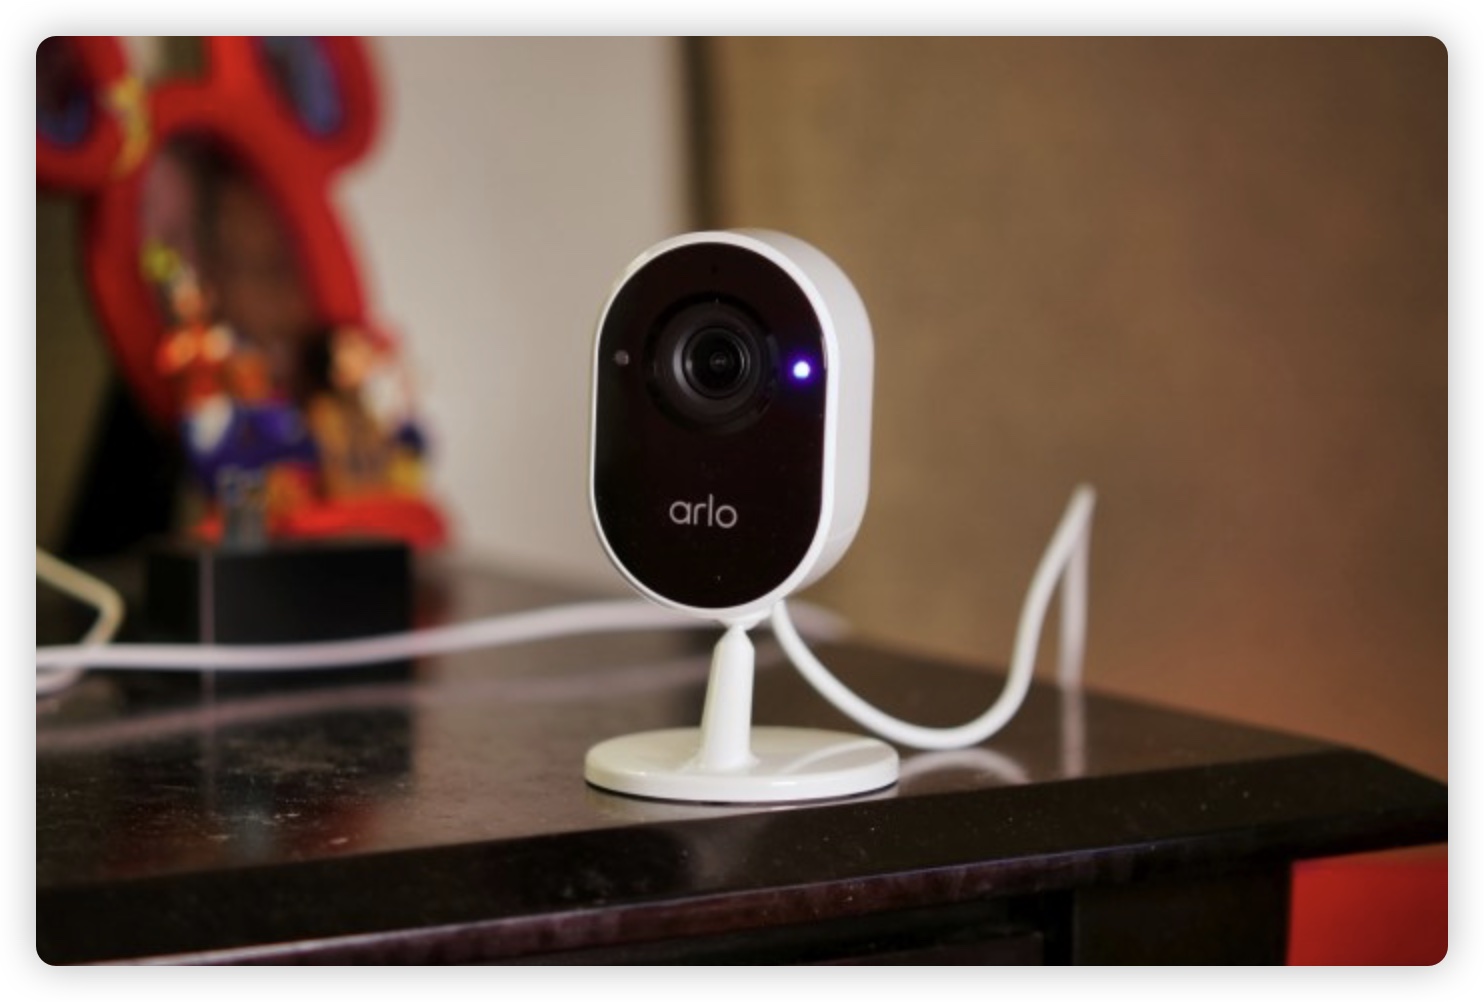 Apple HomeKit 安全攝影機 推薦